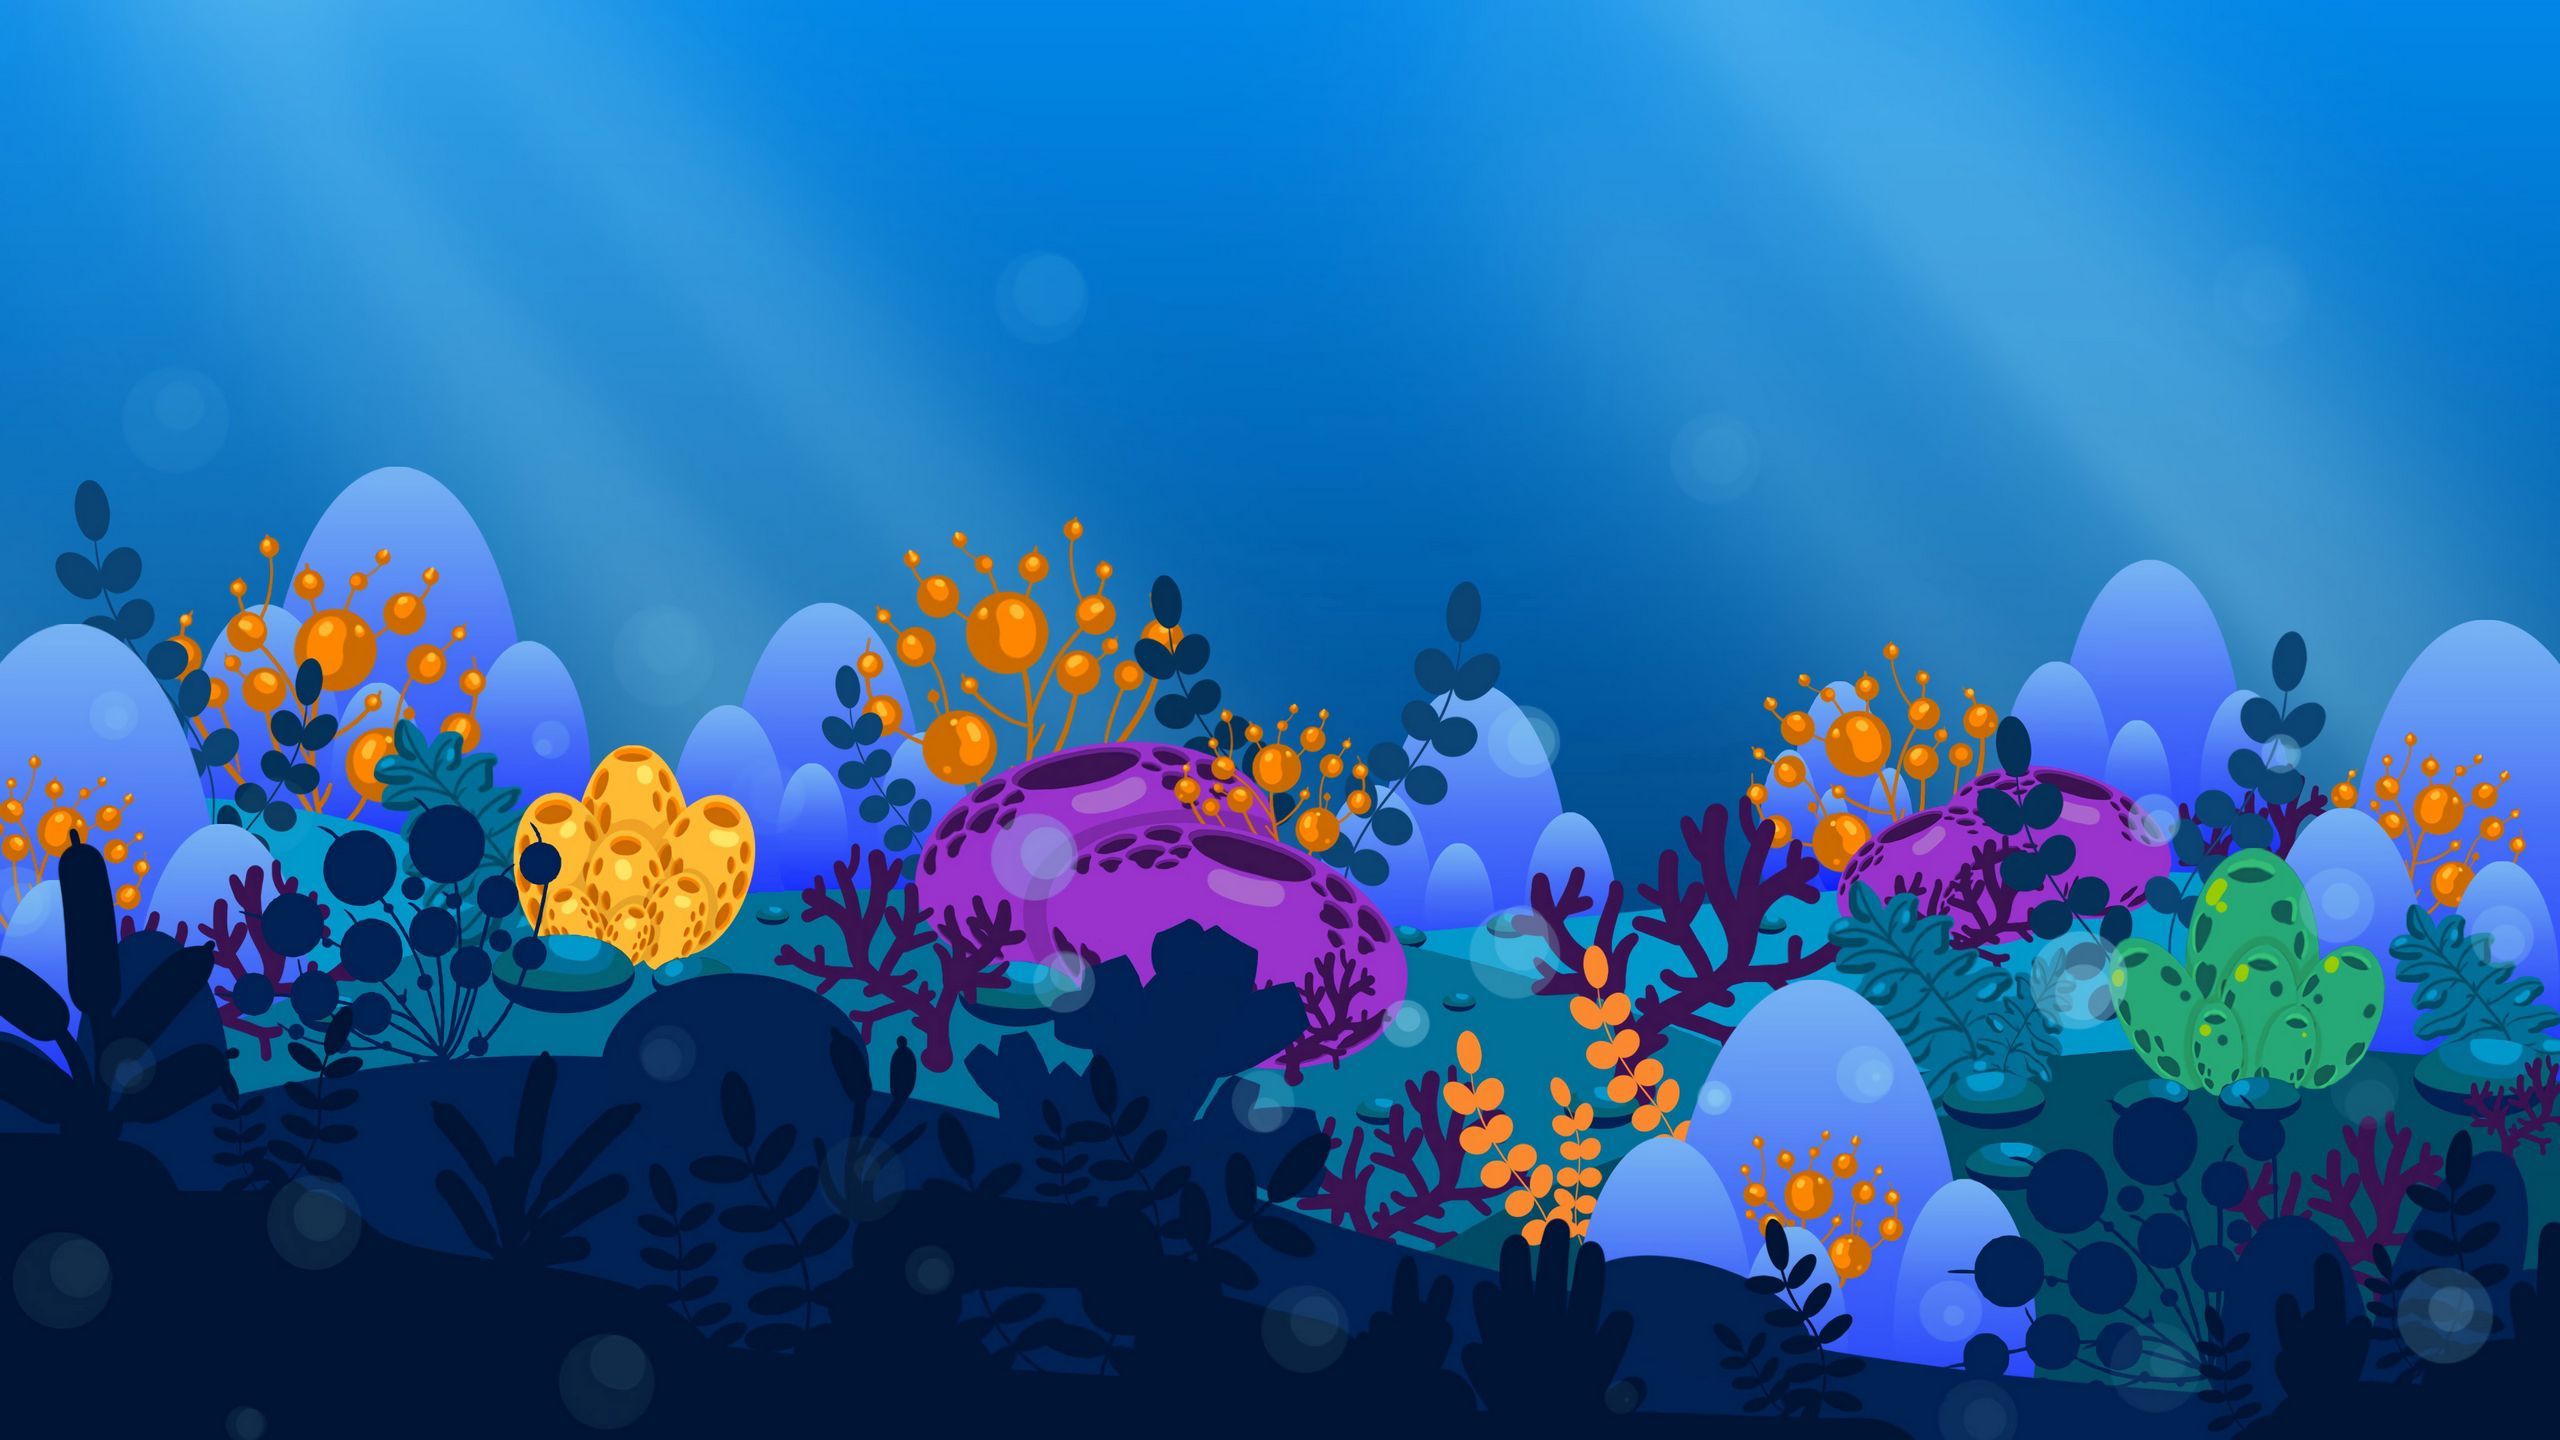 Download wallpaper 2560x1440 seaweed, sea, art, vector widescreen 16:9 HD background